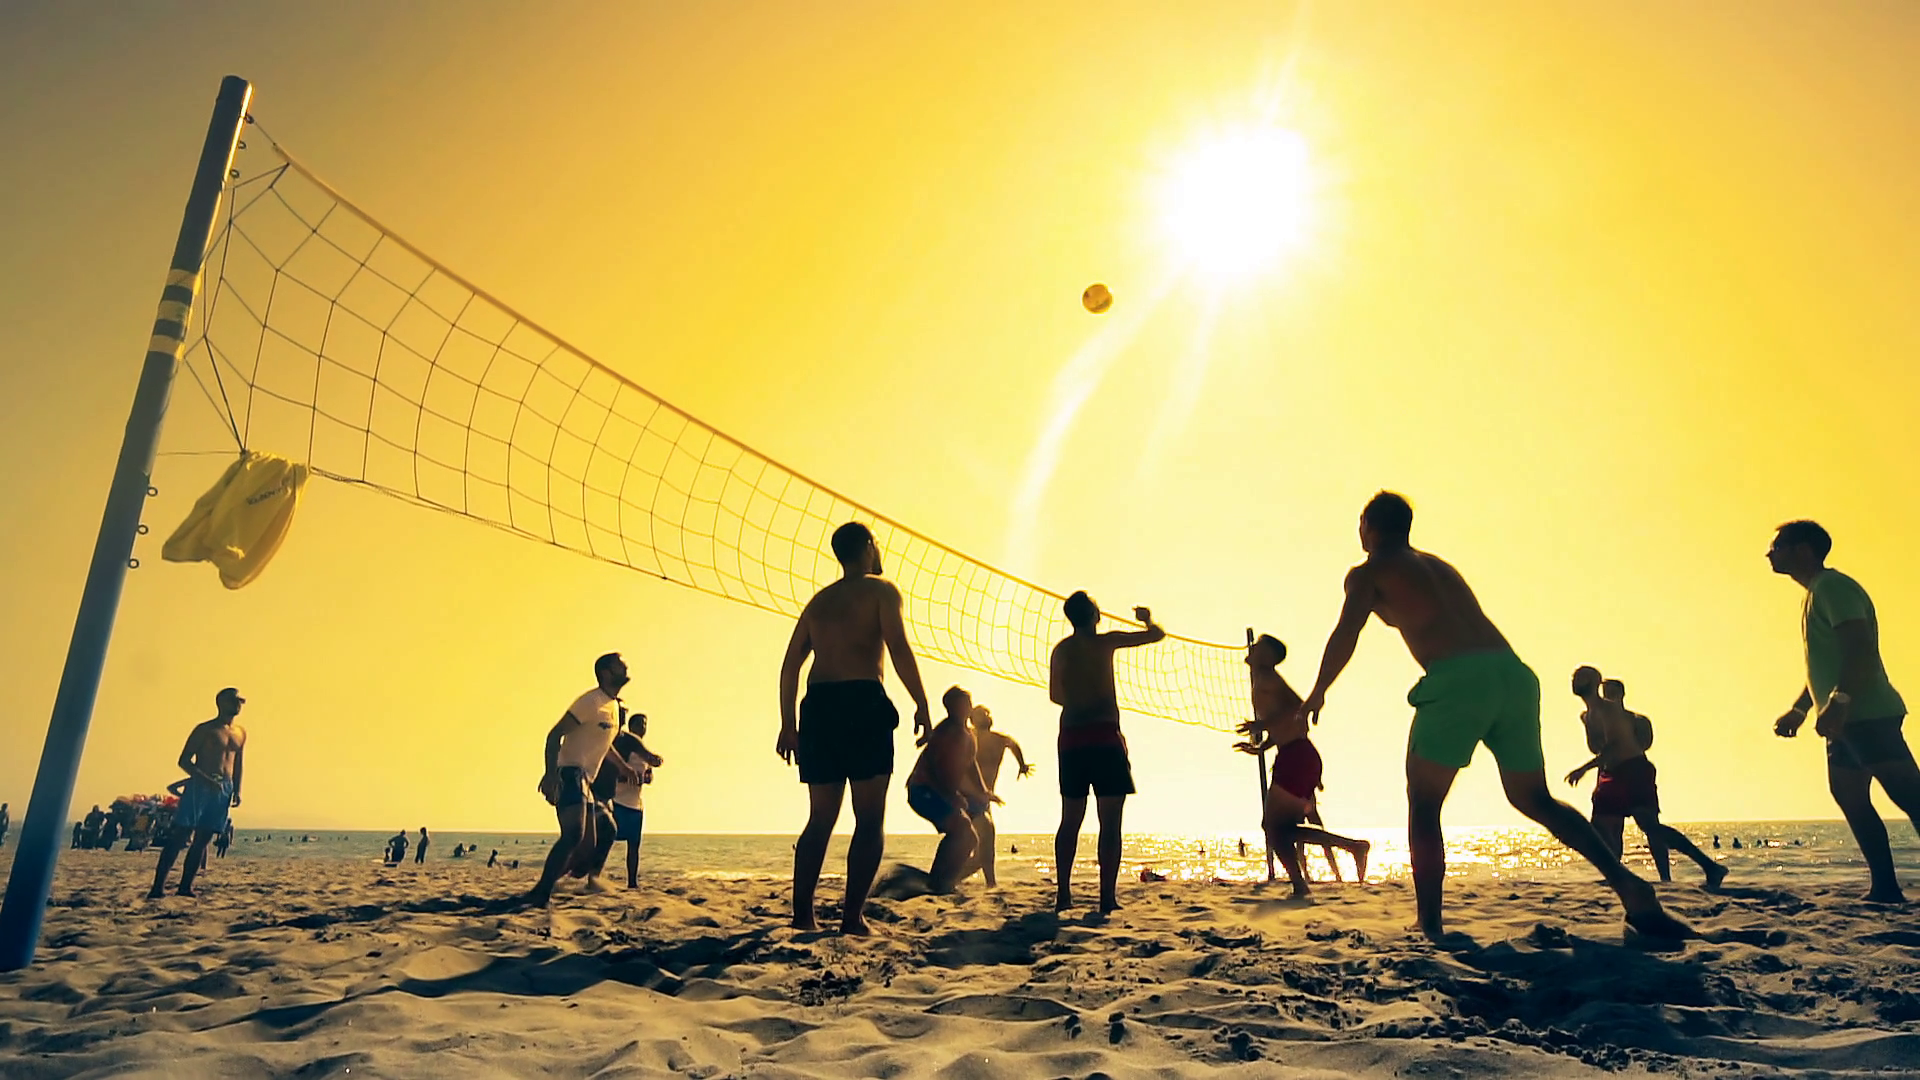 Волейбол на пляже. Пляжный волейбол. Волейбол семья. Пляж волейбол фон. What sports do you enjoy